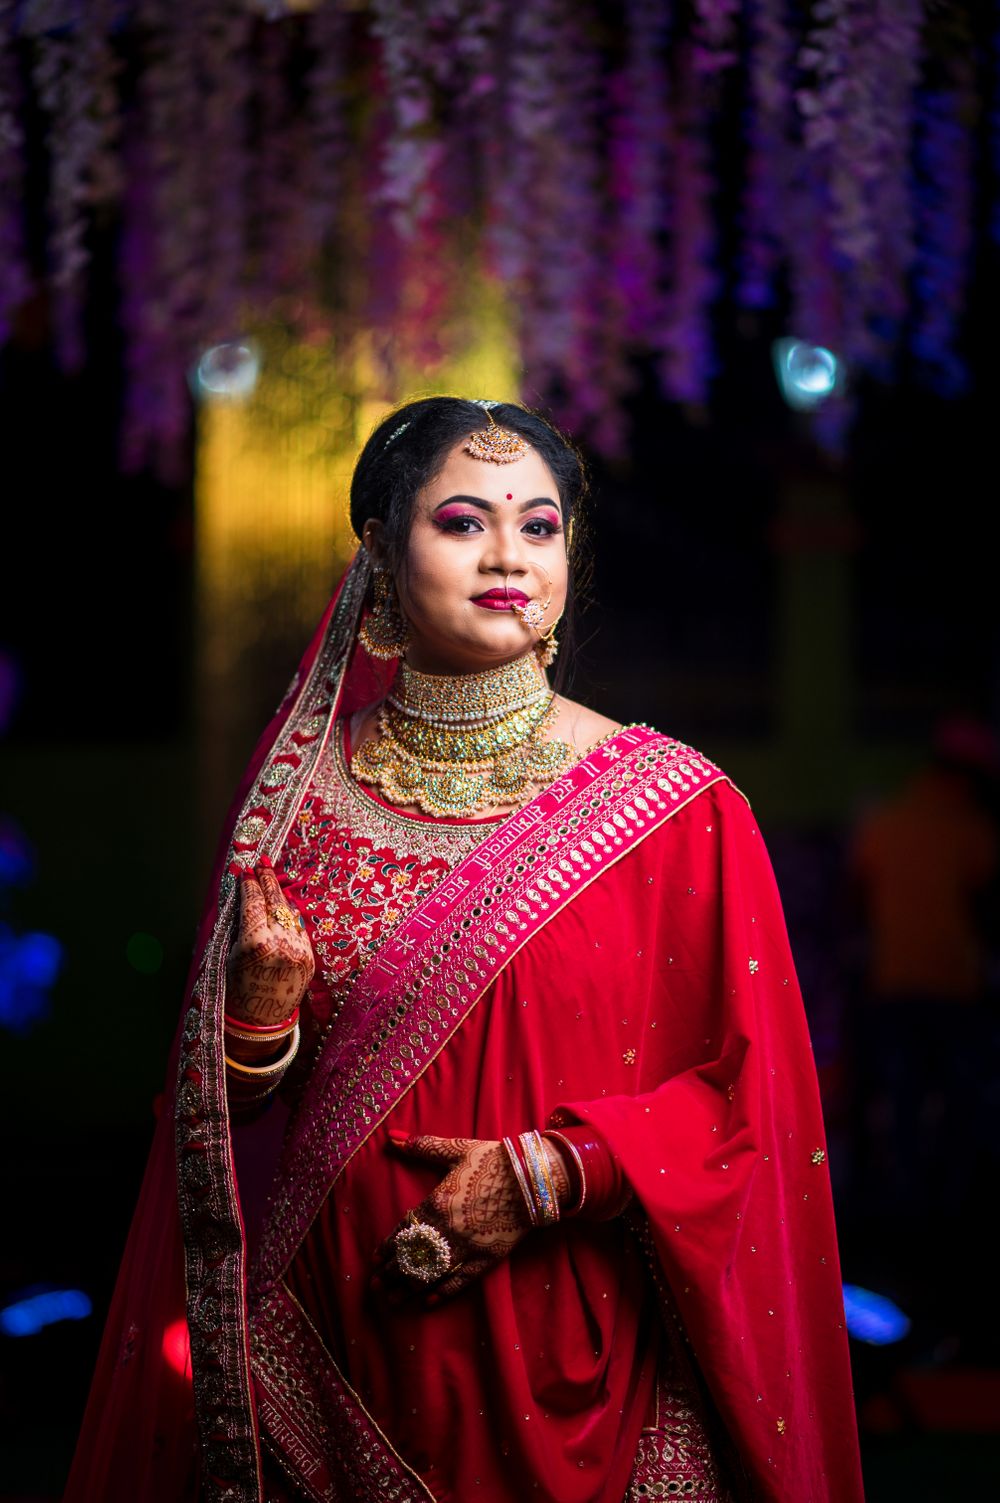 Photo From Rudra ♥ Indusmita - By The Wedding Mashup